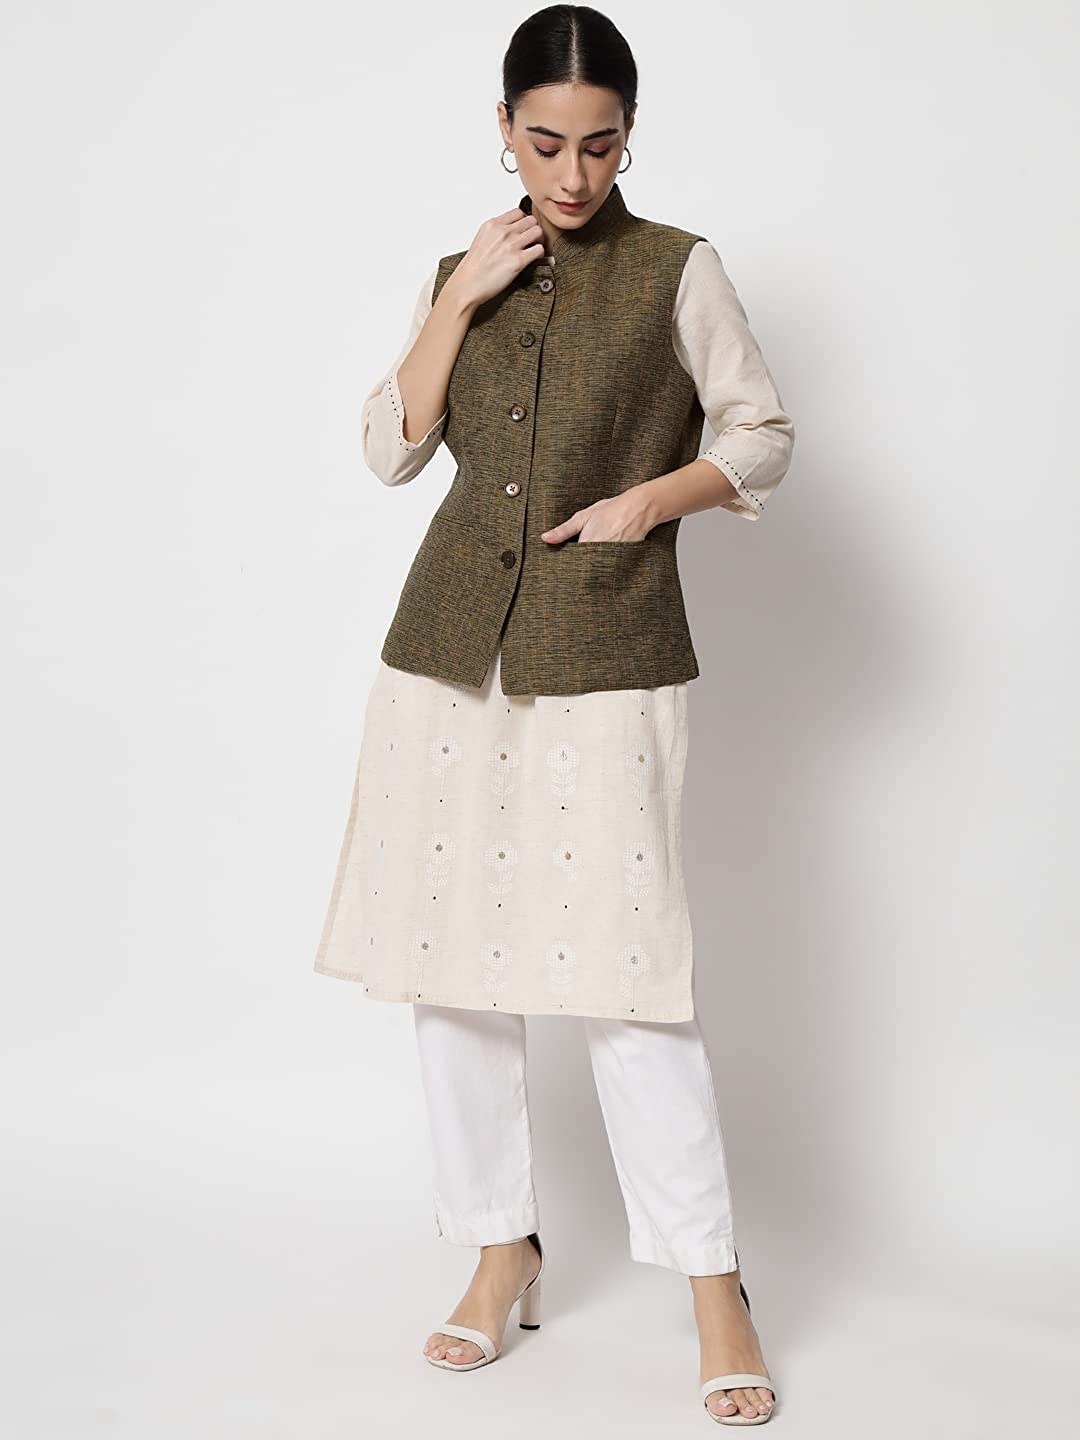 Nehru jacket women – A Tru-Essential To Elevate Your Style